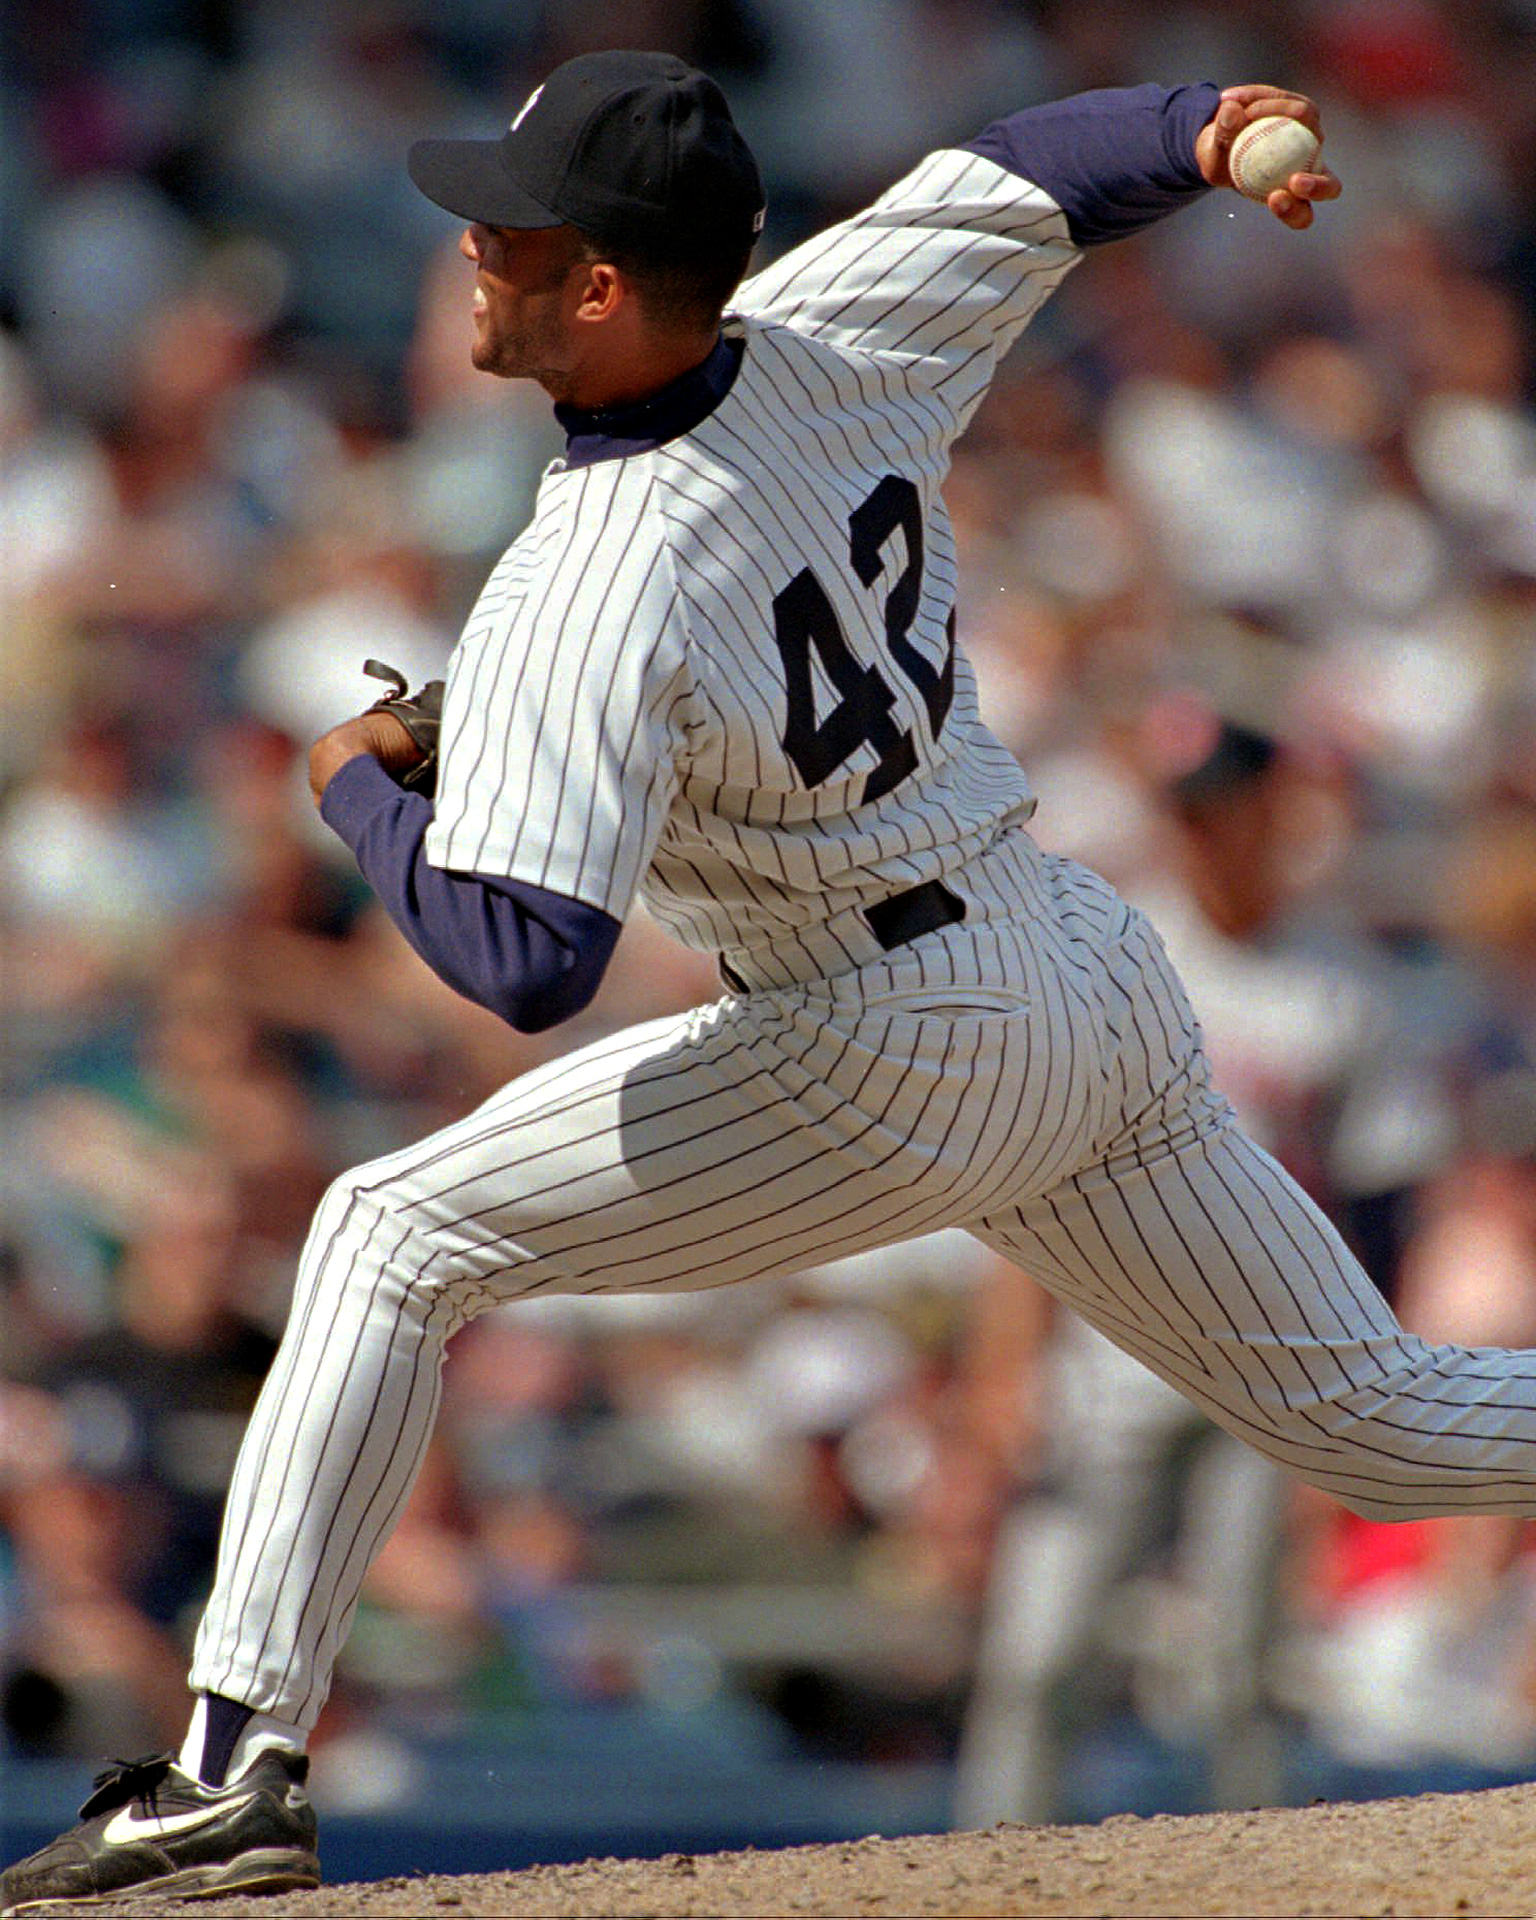 Dead Sox! - New York Yankees closer Mariano Rivera's Greatest